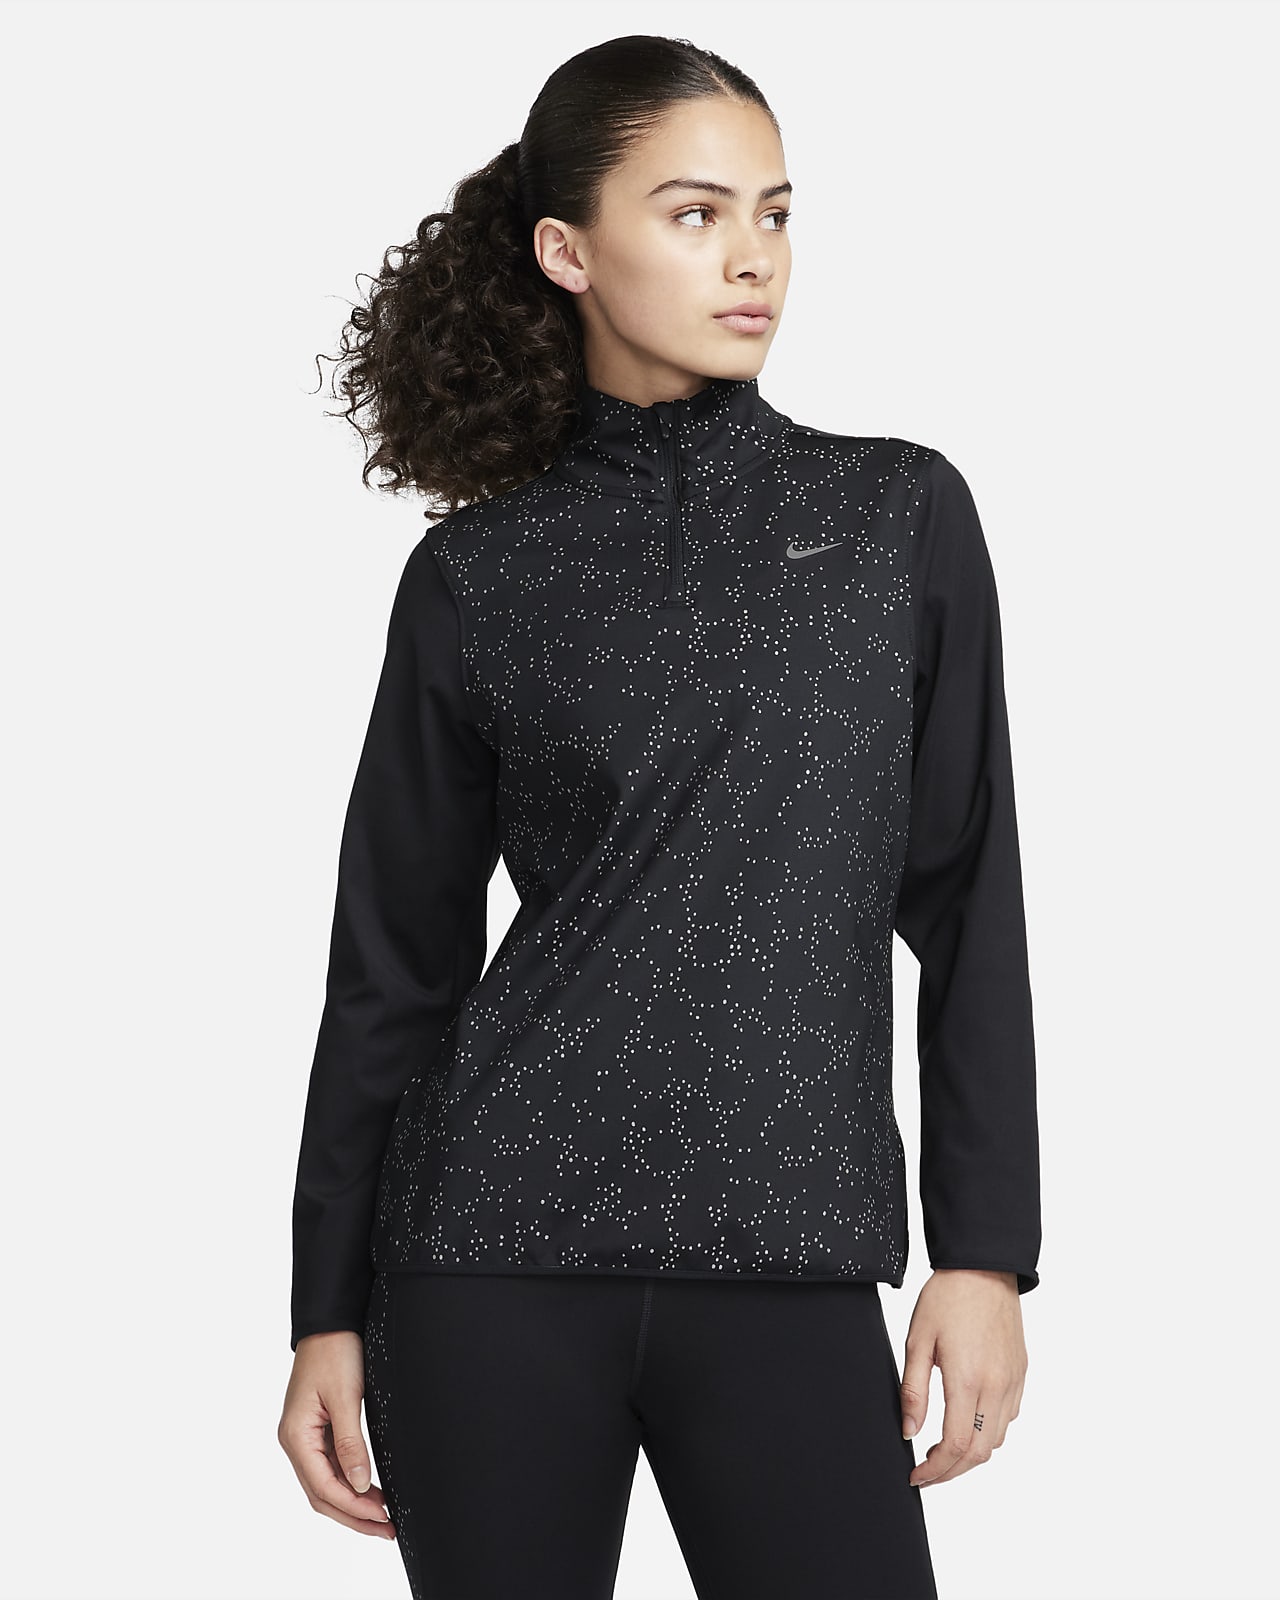 Nike Swift Women's 1/4-Zip Running Top